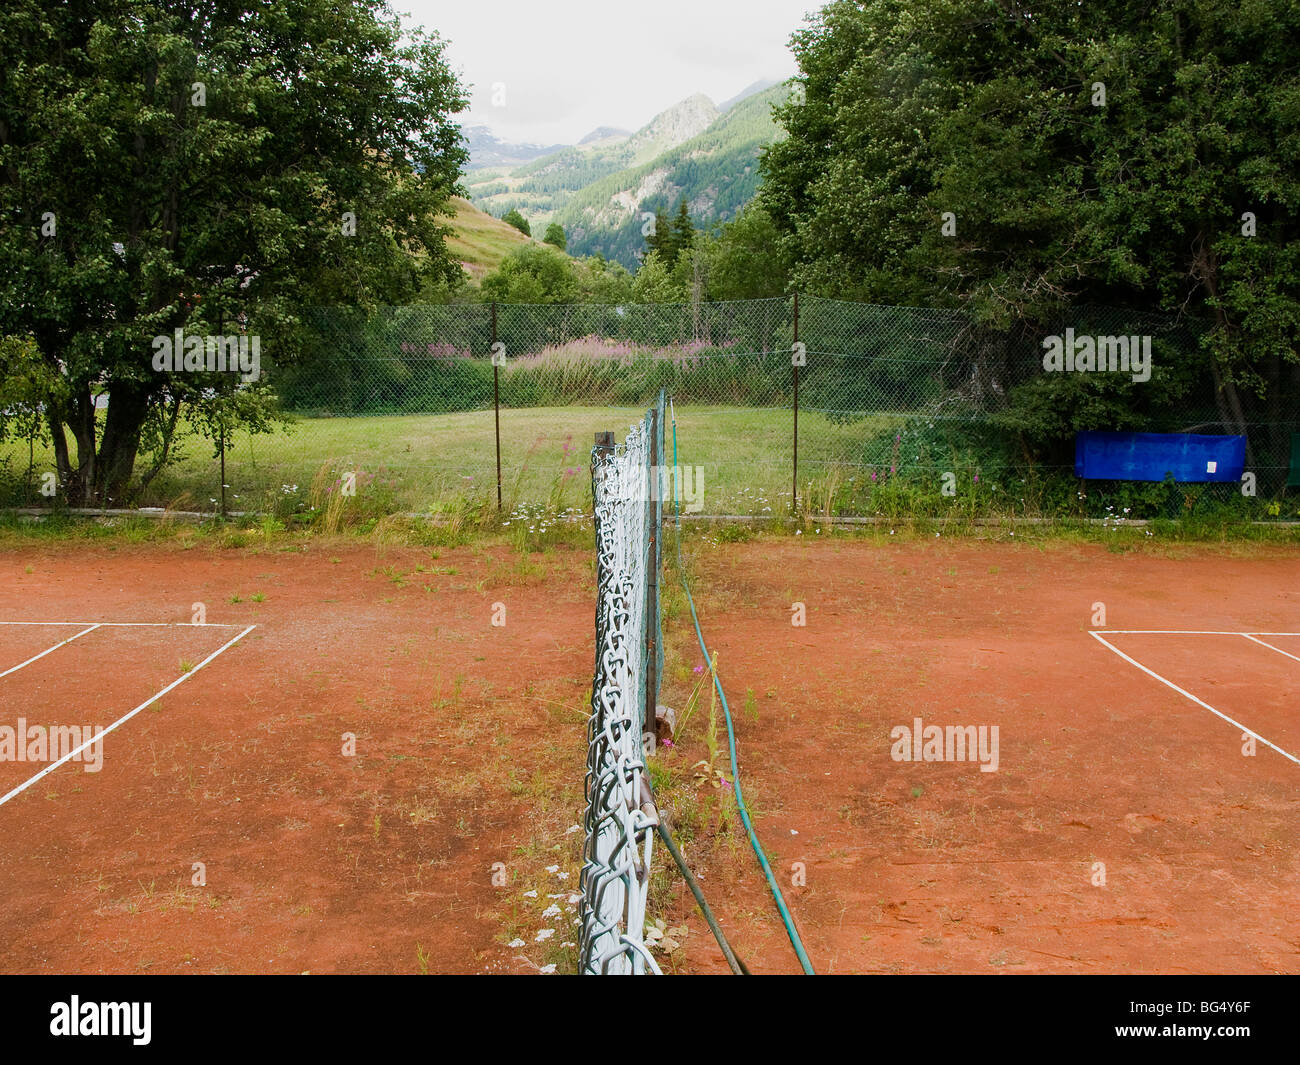 Tennis Verlassenheit alte vernachlässigt aufgegeben aufgegebenen Zeile Zeilen rote Erde Sport Unkraut Val d ' Aosta Italien Alpes Ayas Stockfoto